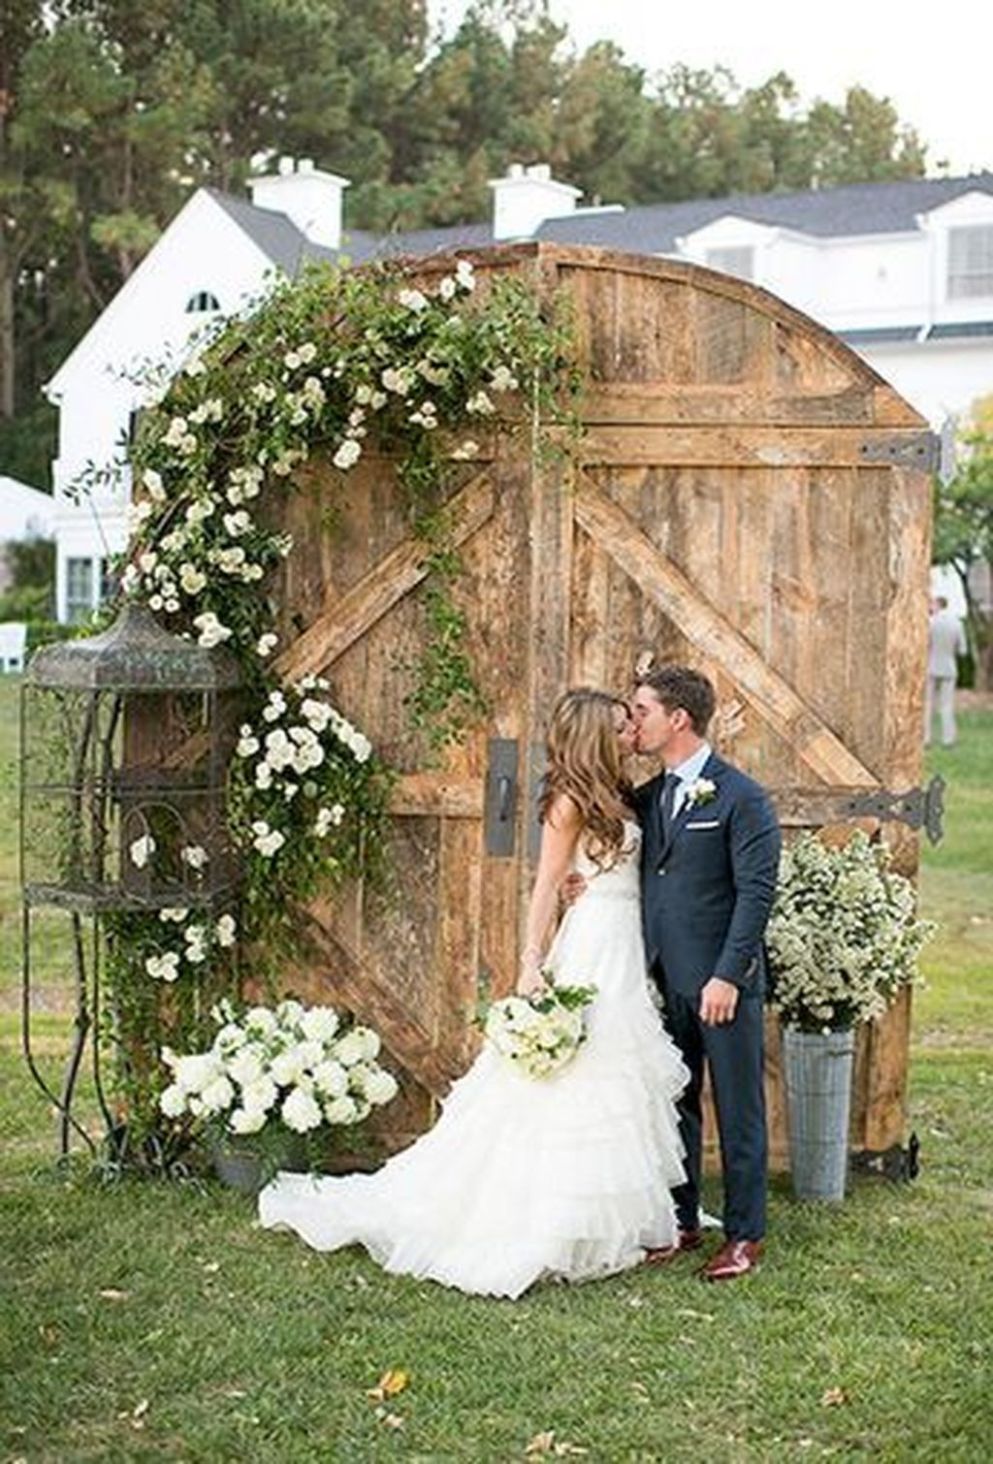 46 Cozy Backyard Wedding Decor Ideas For Summer -   17 wedding Backyard backdrop ideas